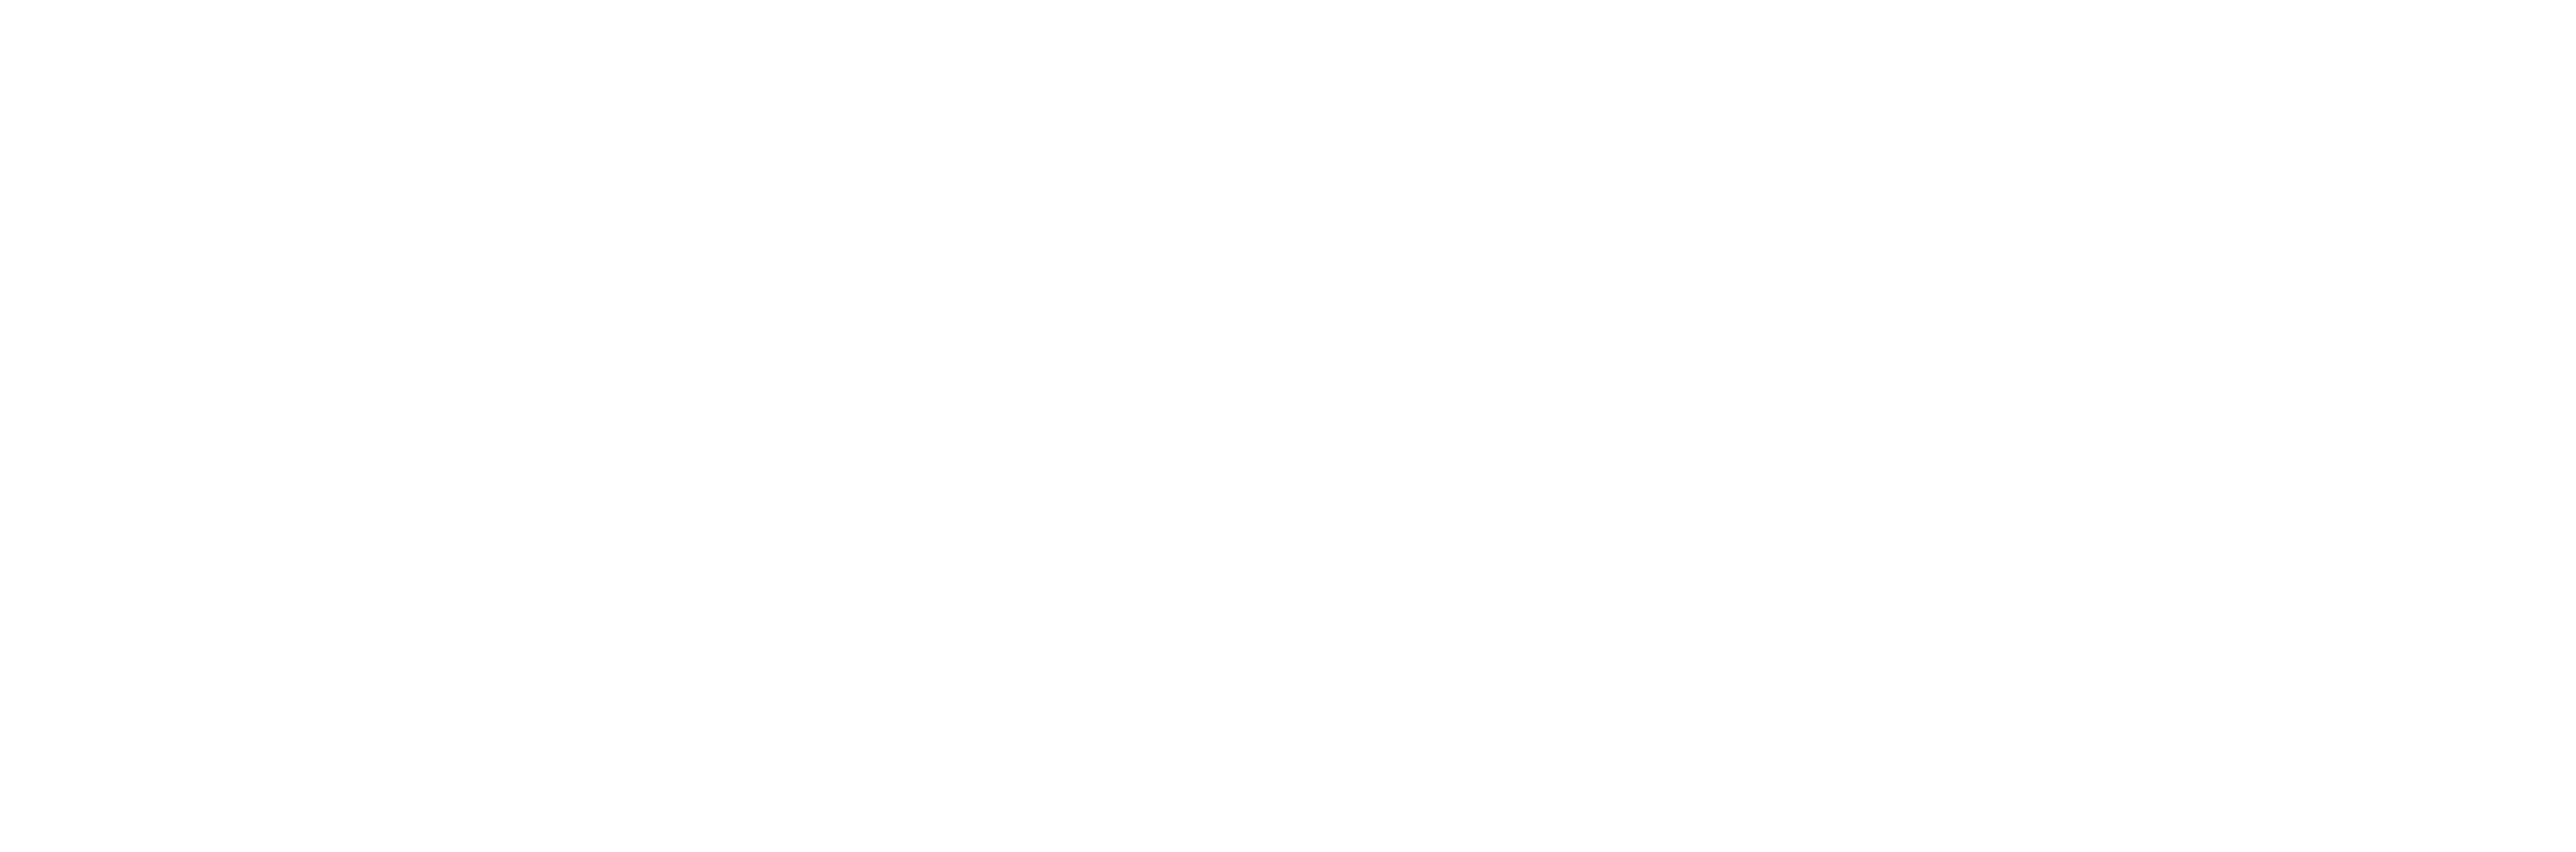 logo pppro blanc